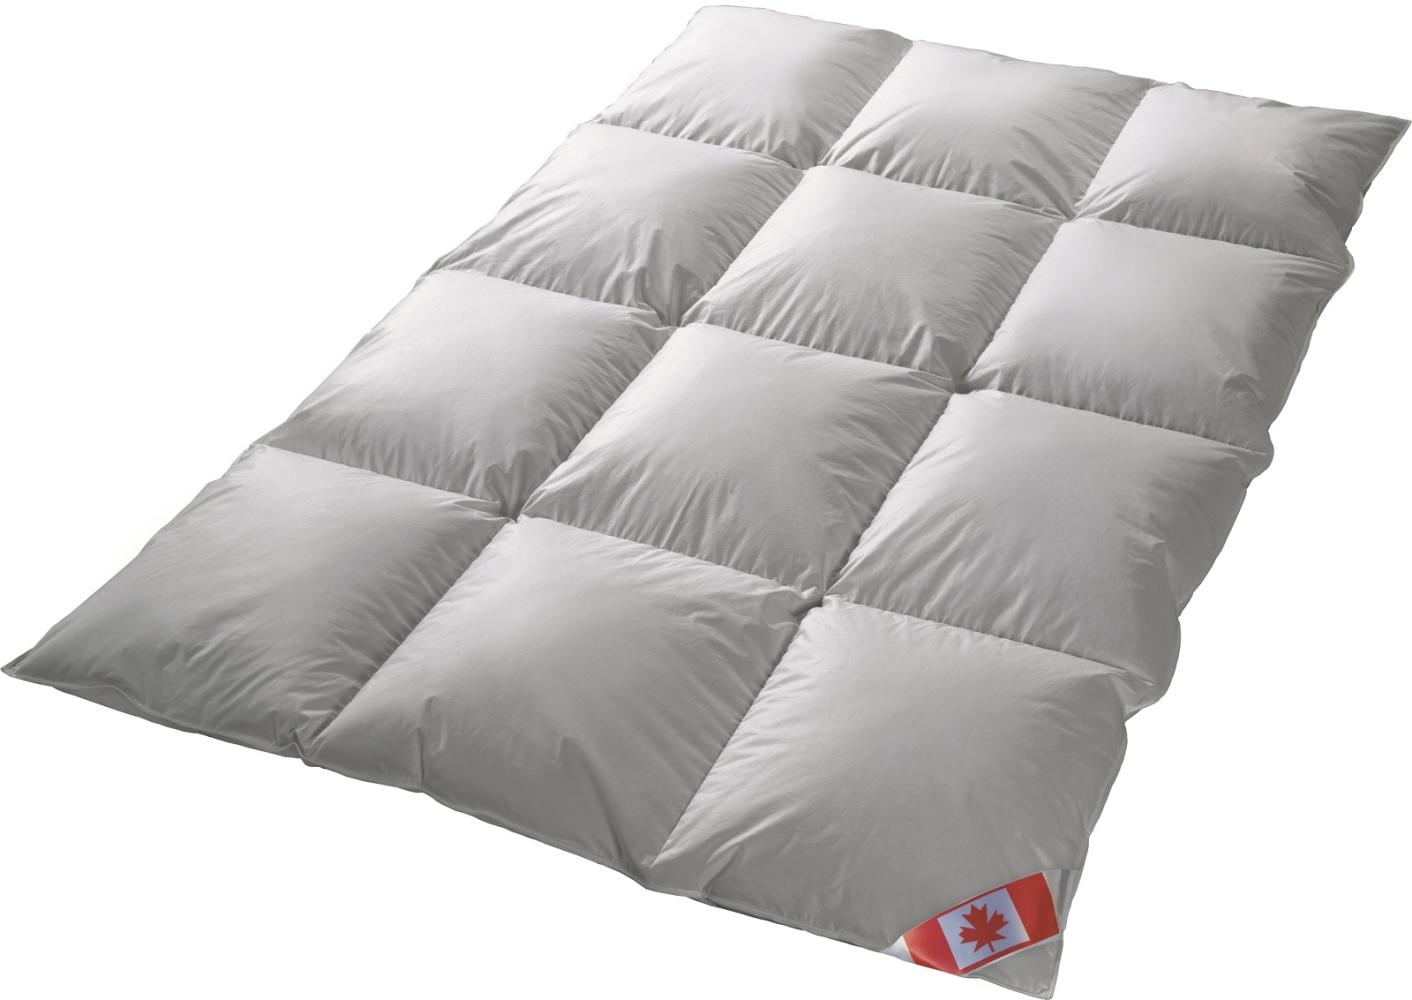 Canada extra warme Winter Decke Kassetten Hochsteg 100% Daune 200x200 cm C5 Bild 1